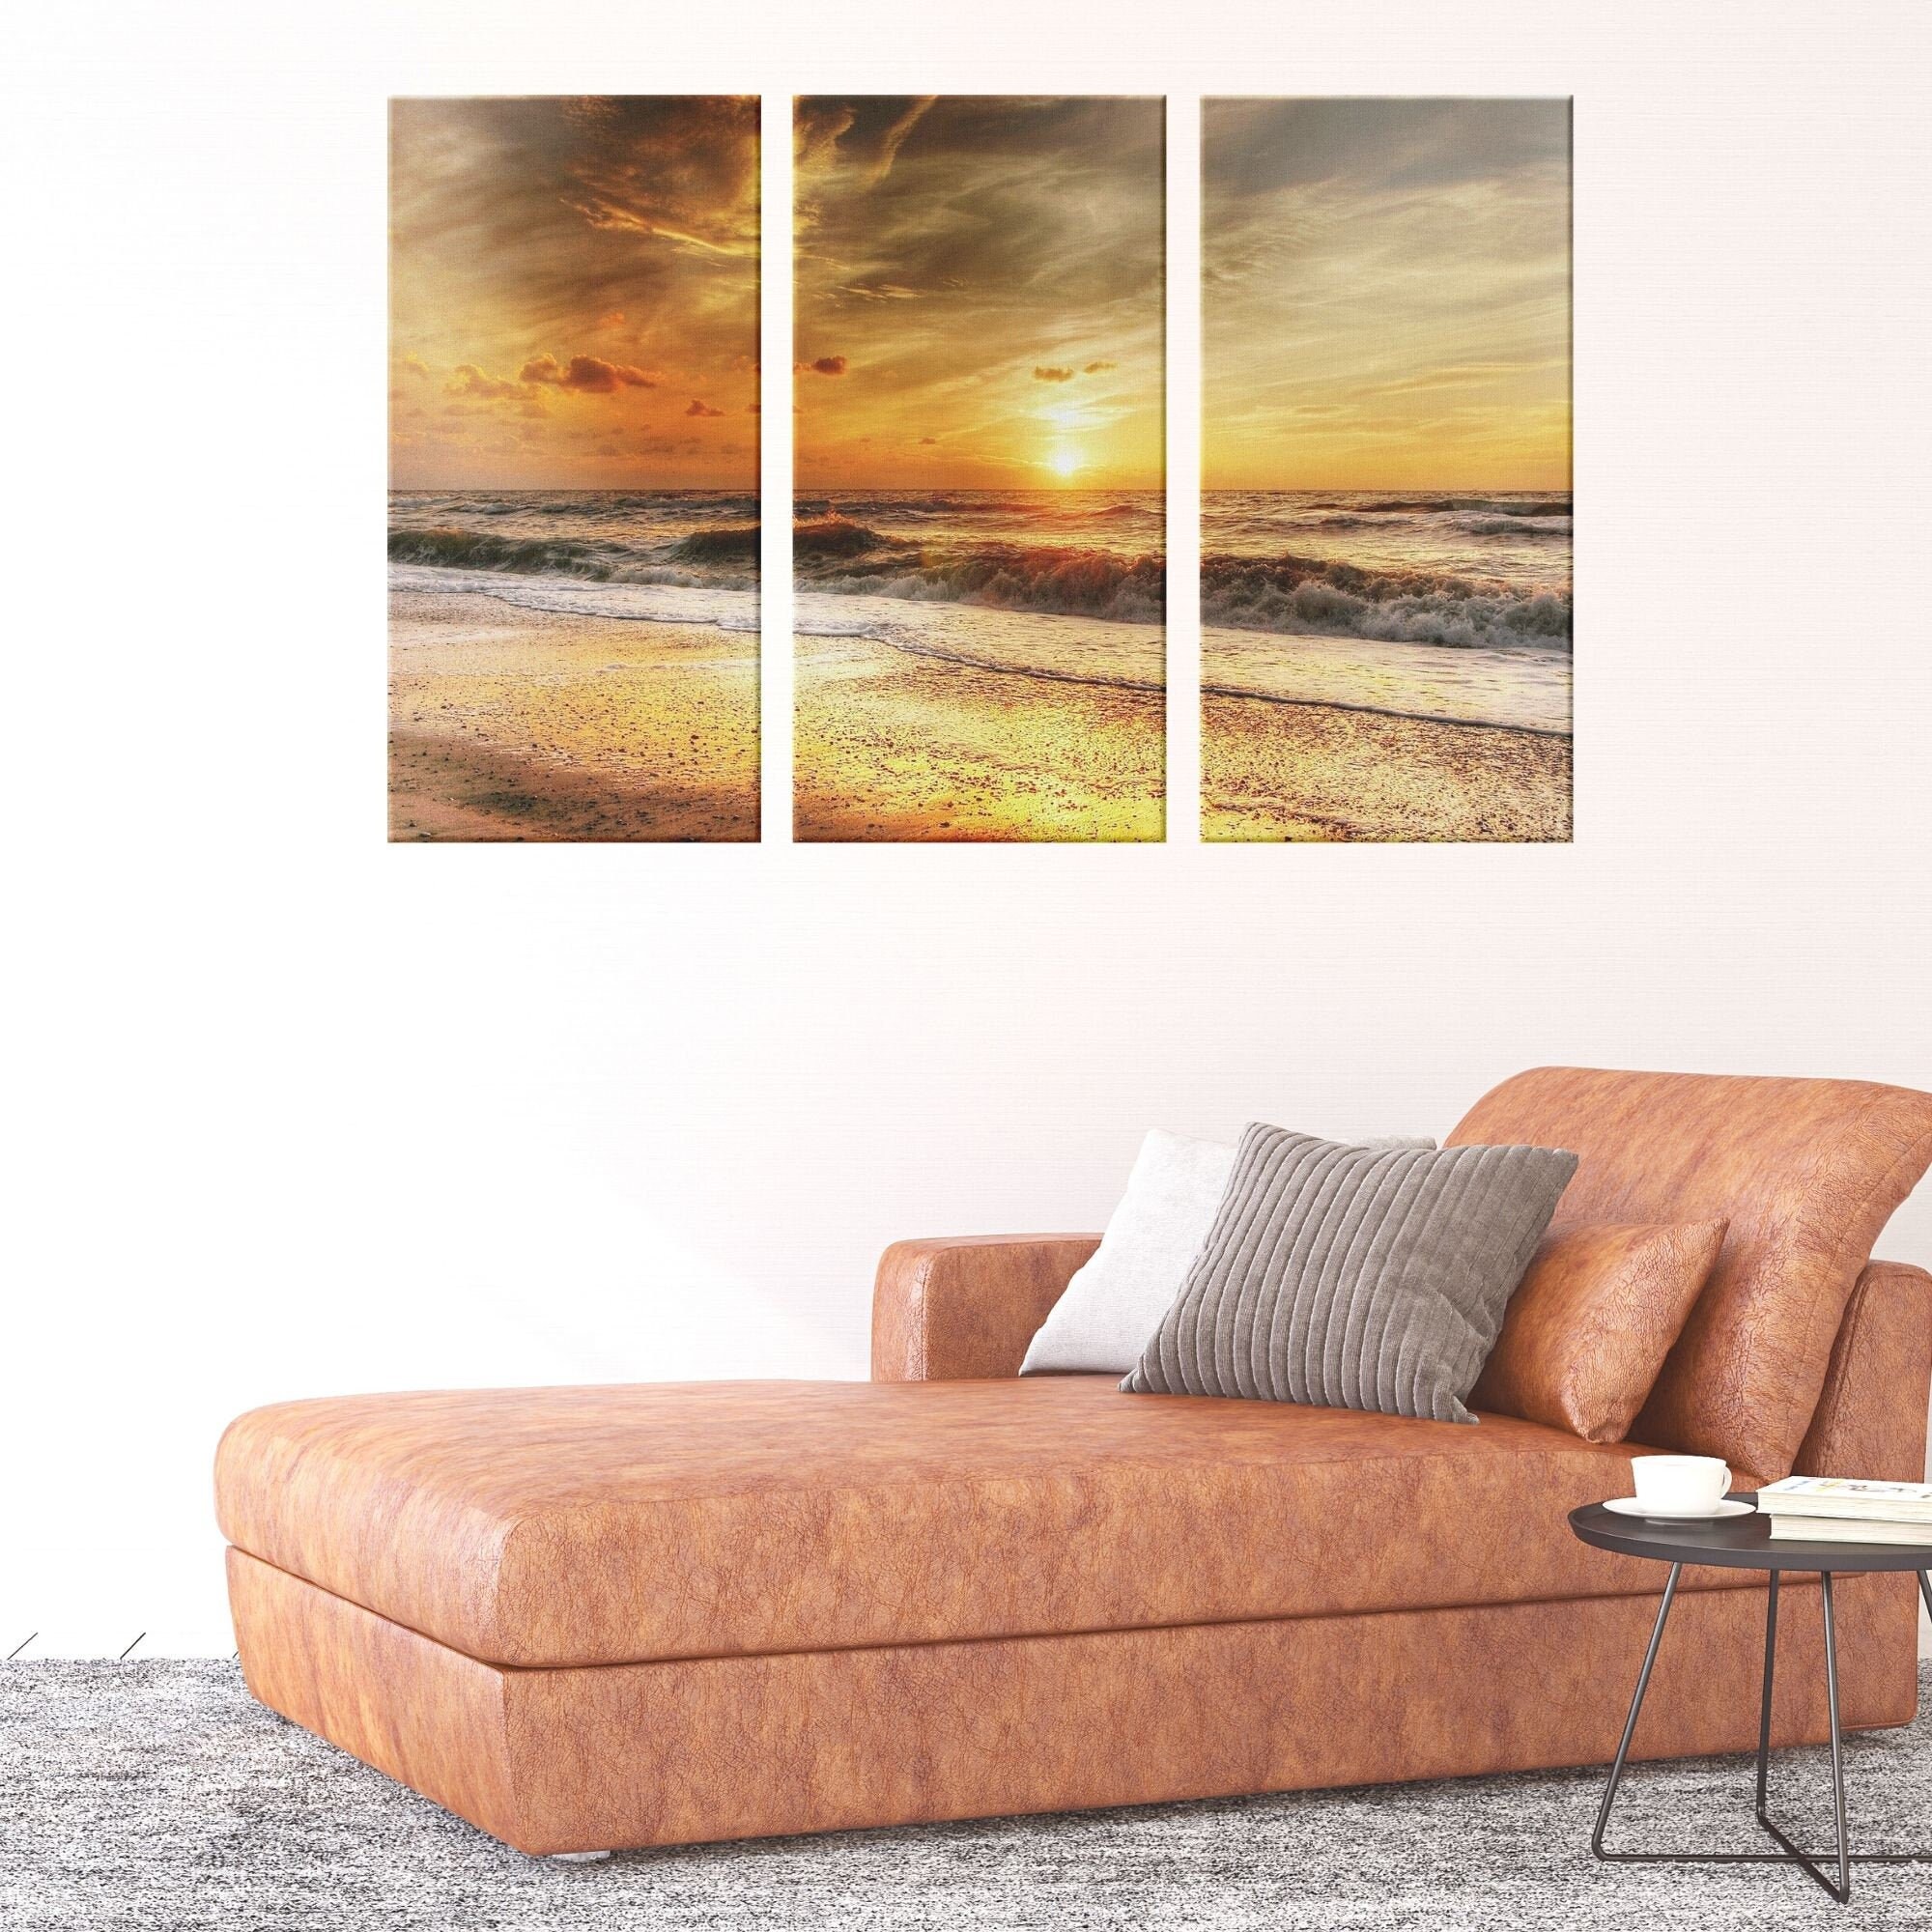 Set Three Orange Sunset Beach Canvas Art Prints Pictures Bedroom 3152 